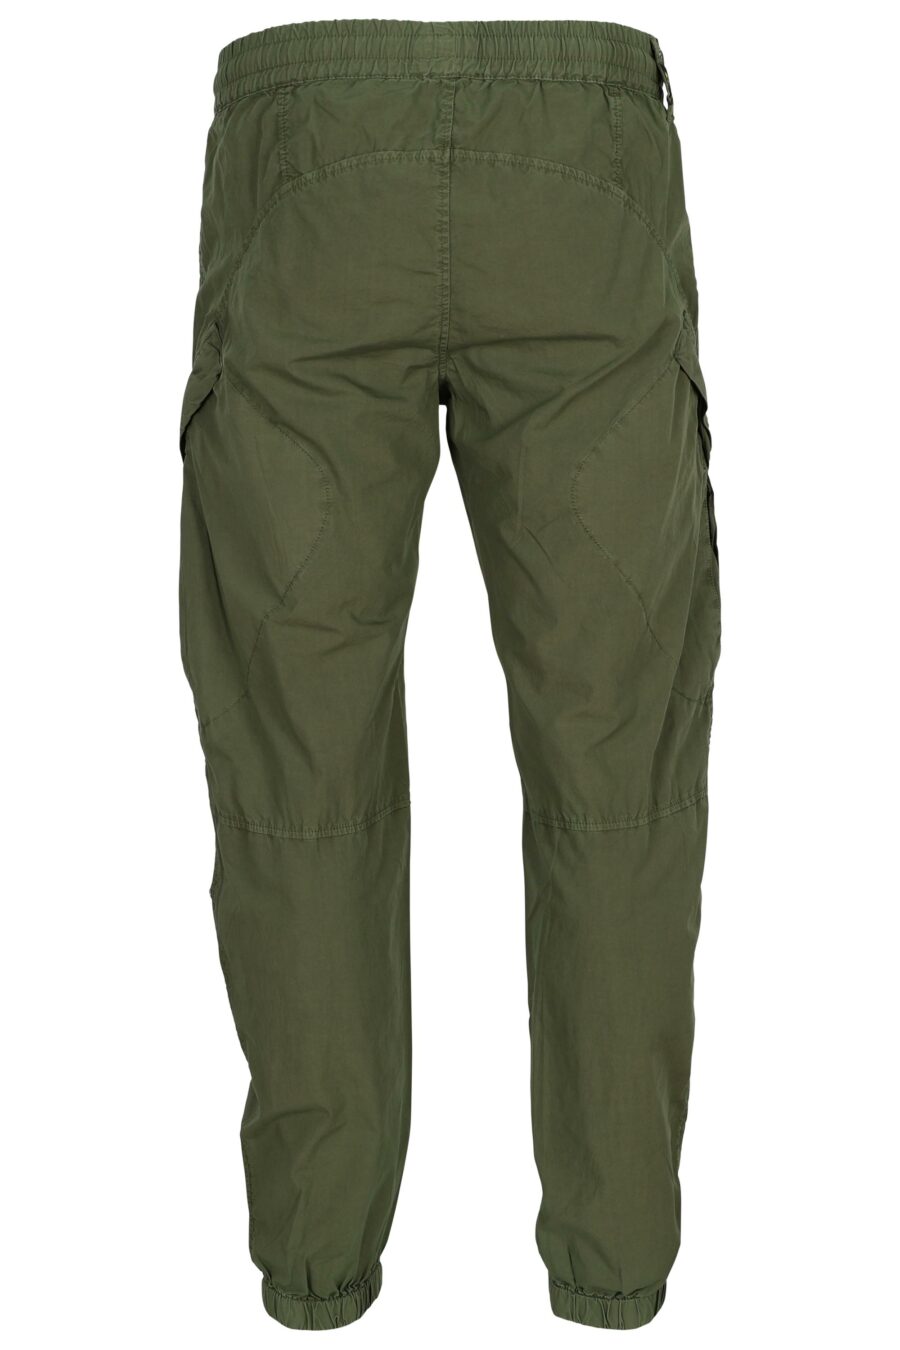 Pantalón verde militar estilo cargo con resorte - 8058610767143 2